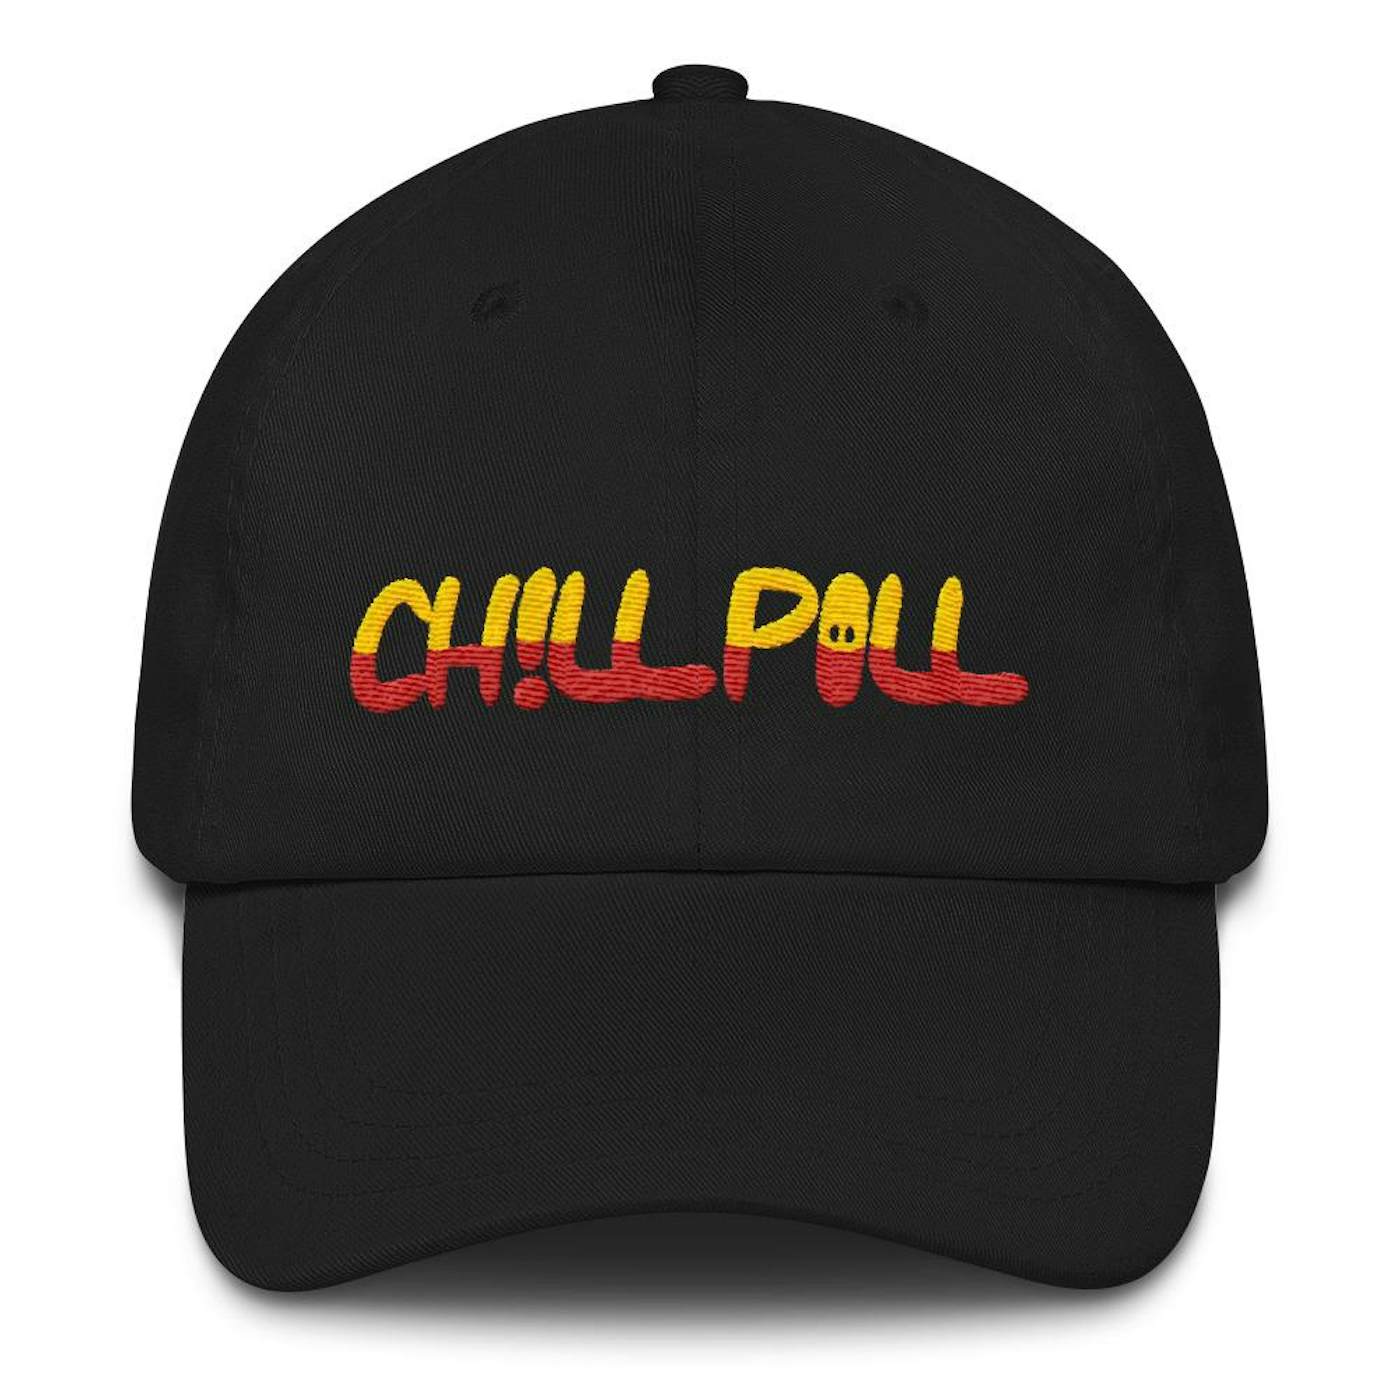 chillpill 💊 dad hat